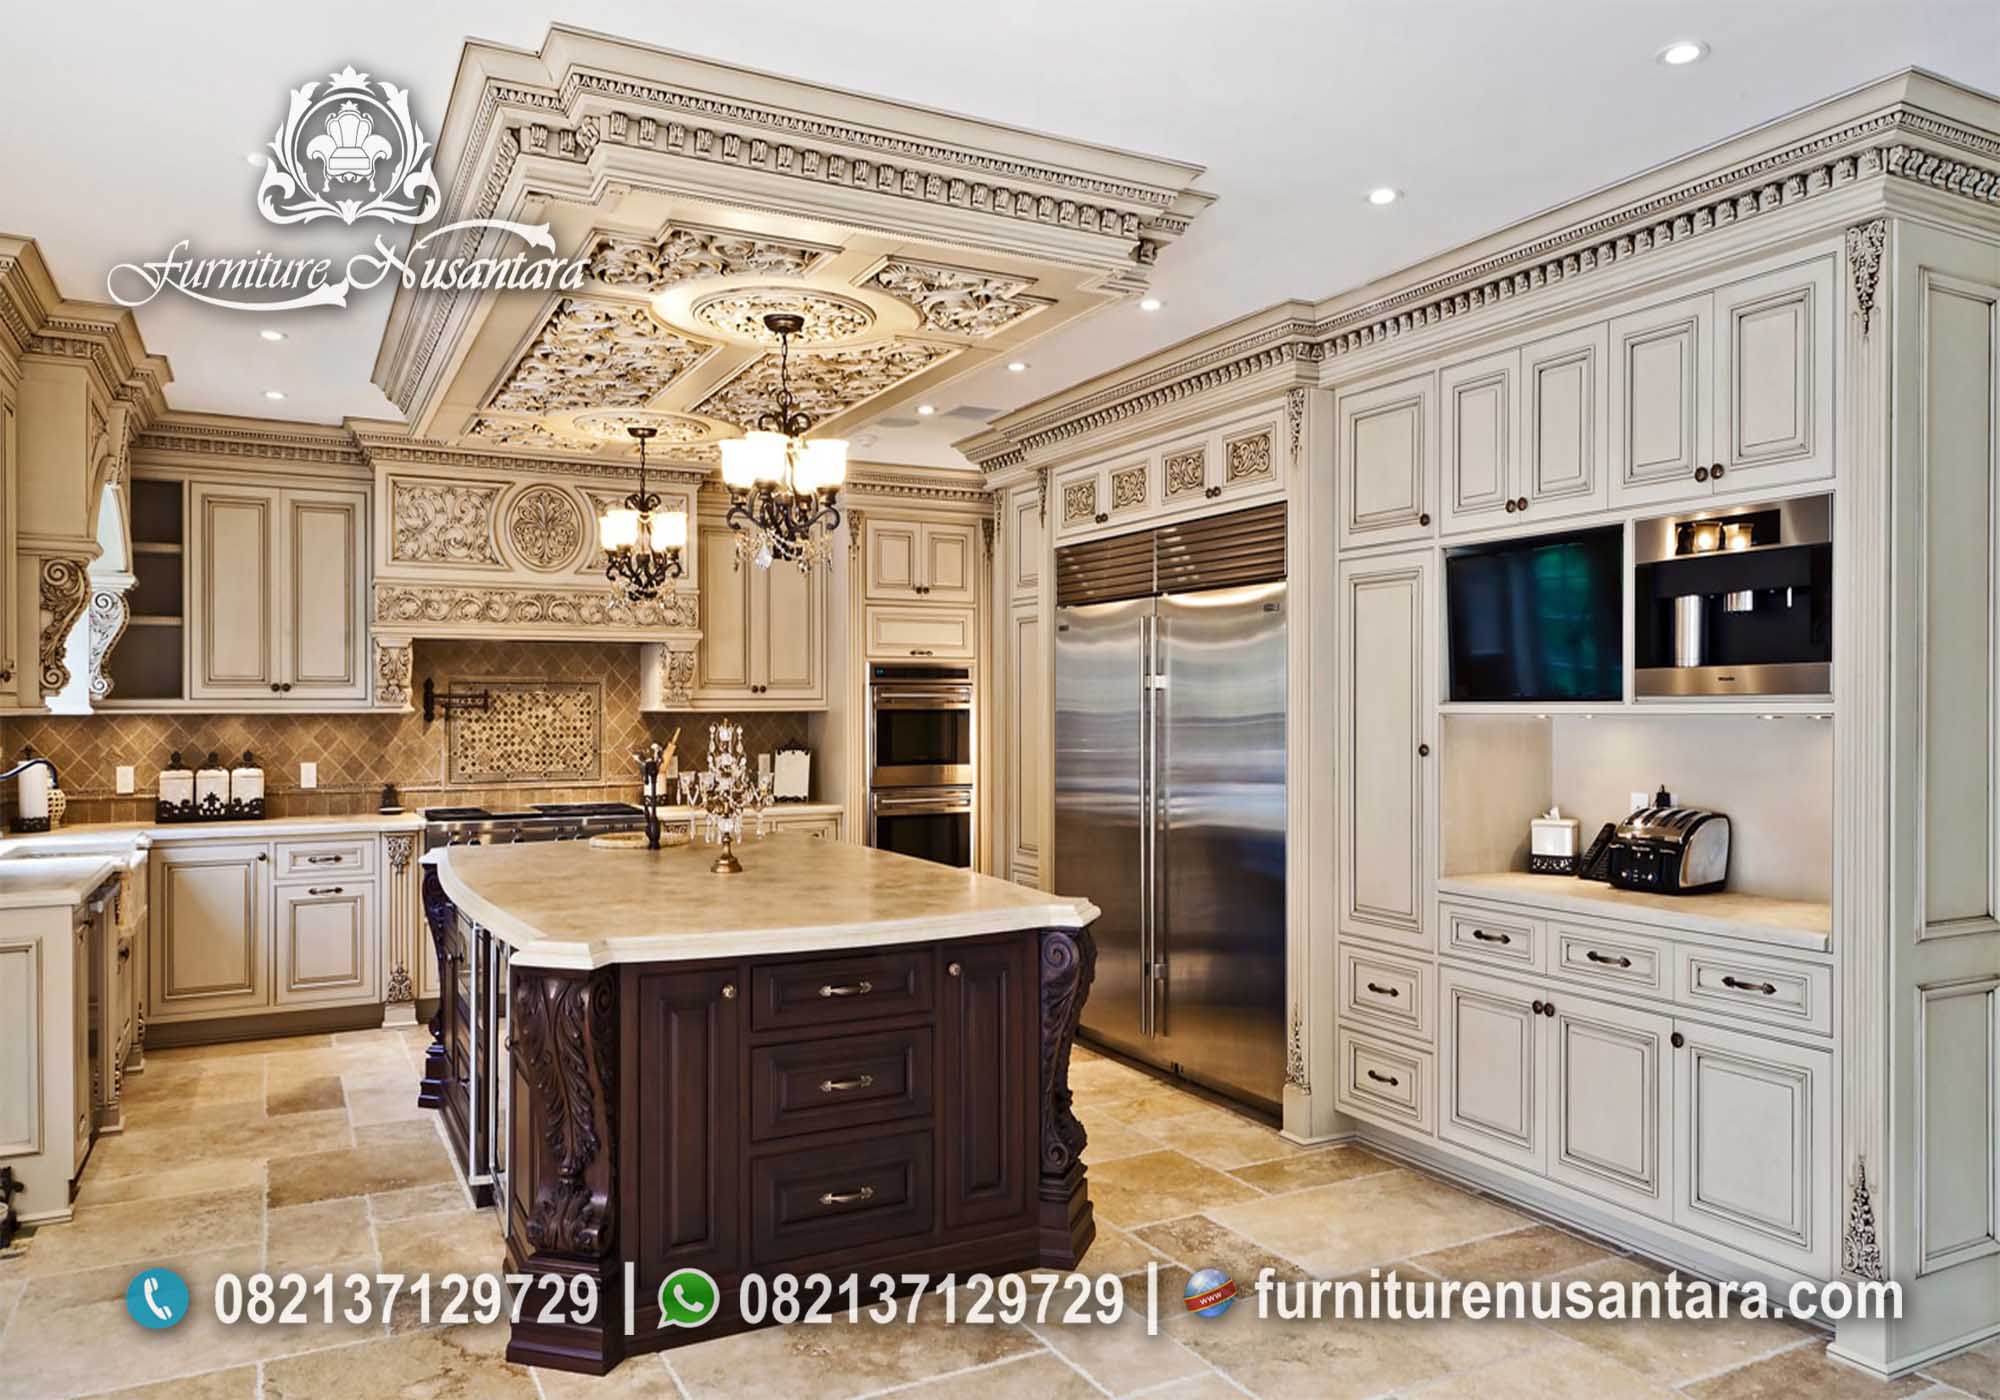 Kitchen Set Mewah, Kitchen Set Modern, Model Kitchen Set Terbaik, Dapur Rumah Mewah, Dapur Rumah Sultan, Dapur Eropa